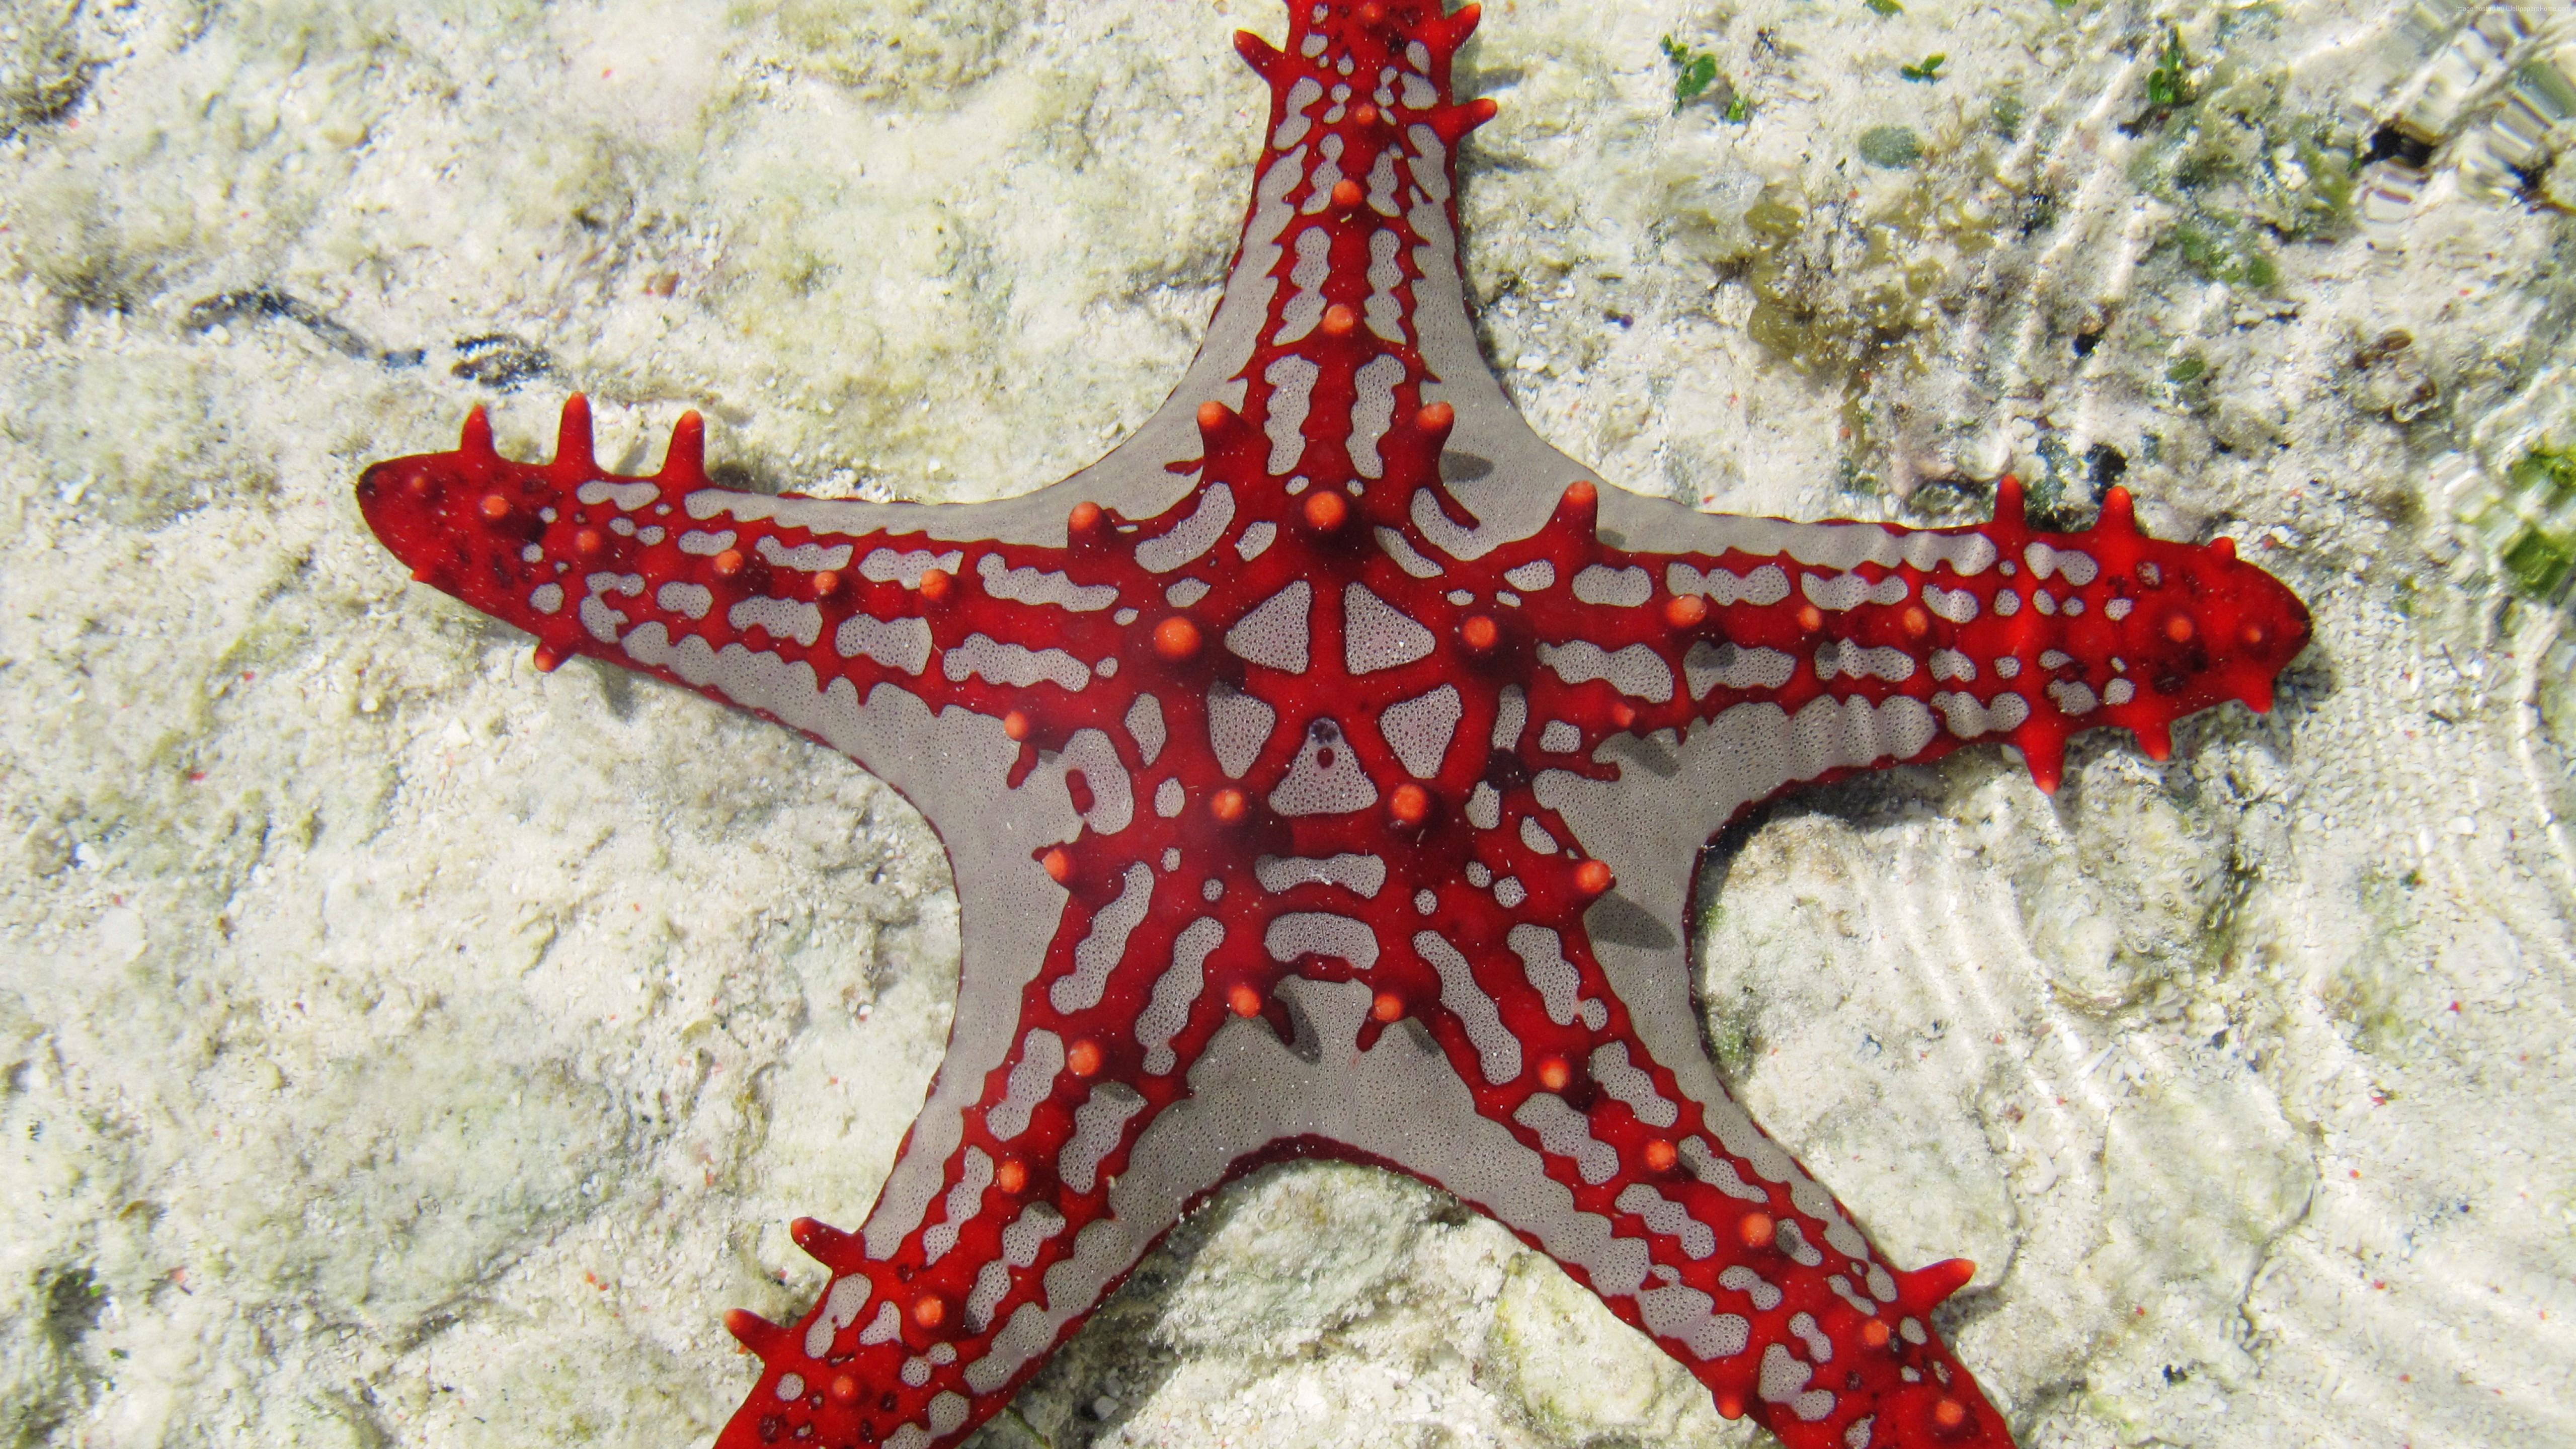 Sea Star Zanzibar Africa Diving Tourism Underwater Fish 5k Wallpaper